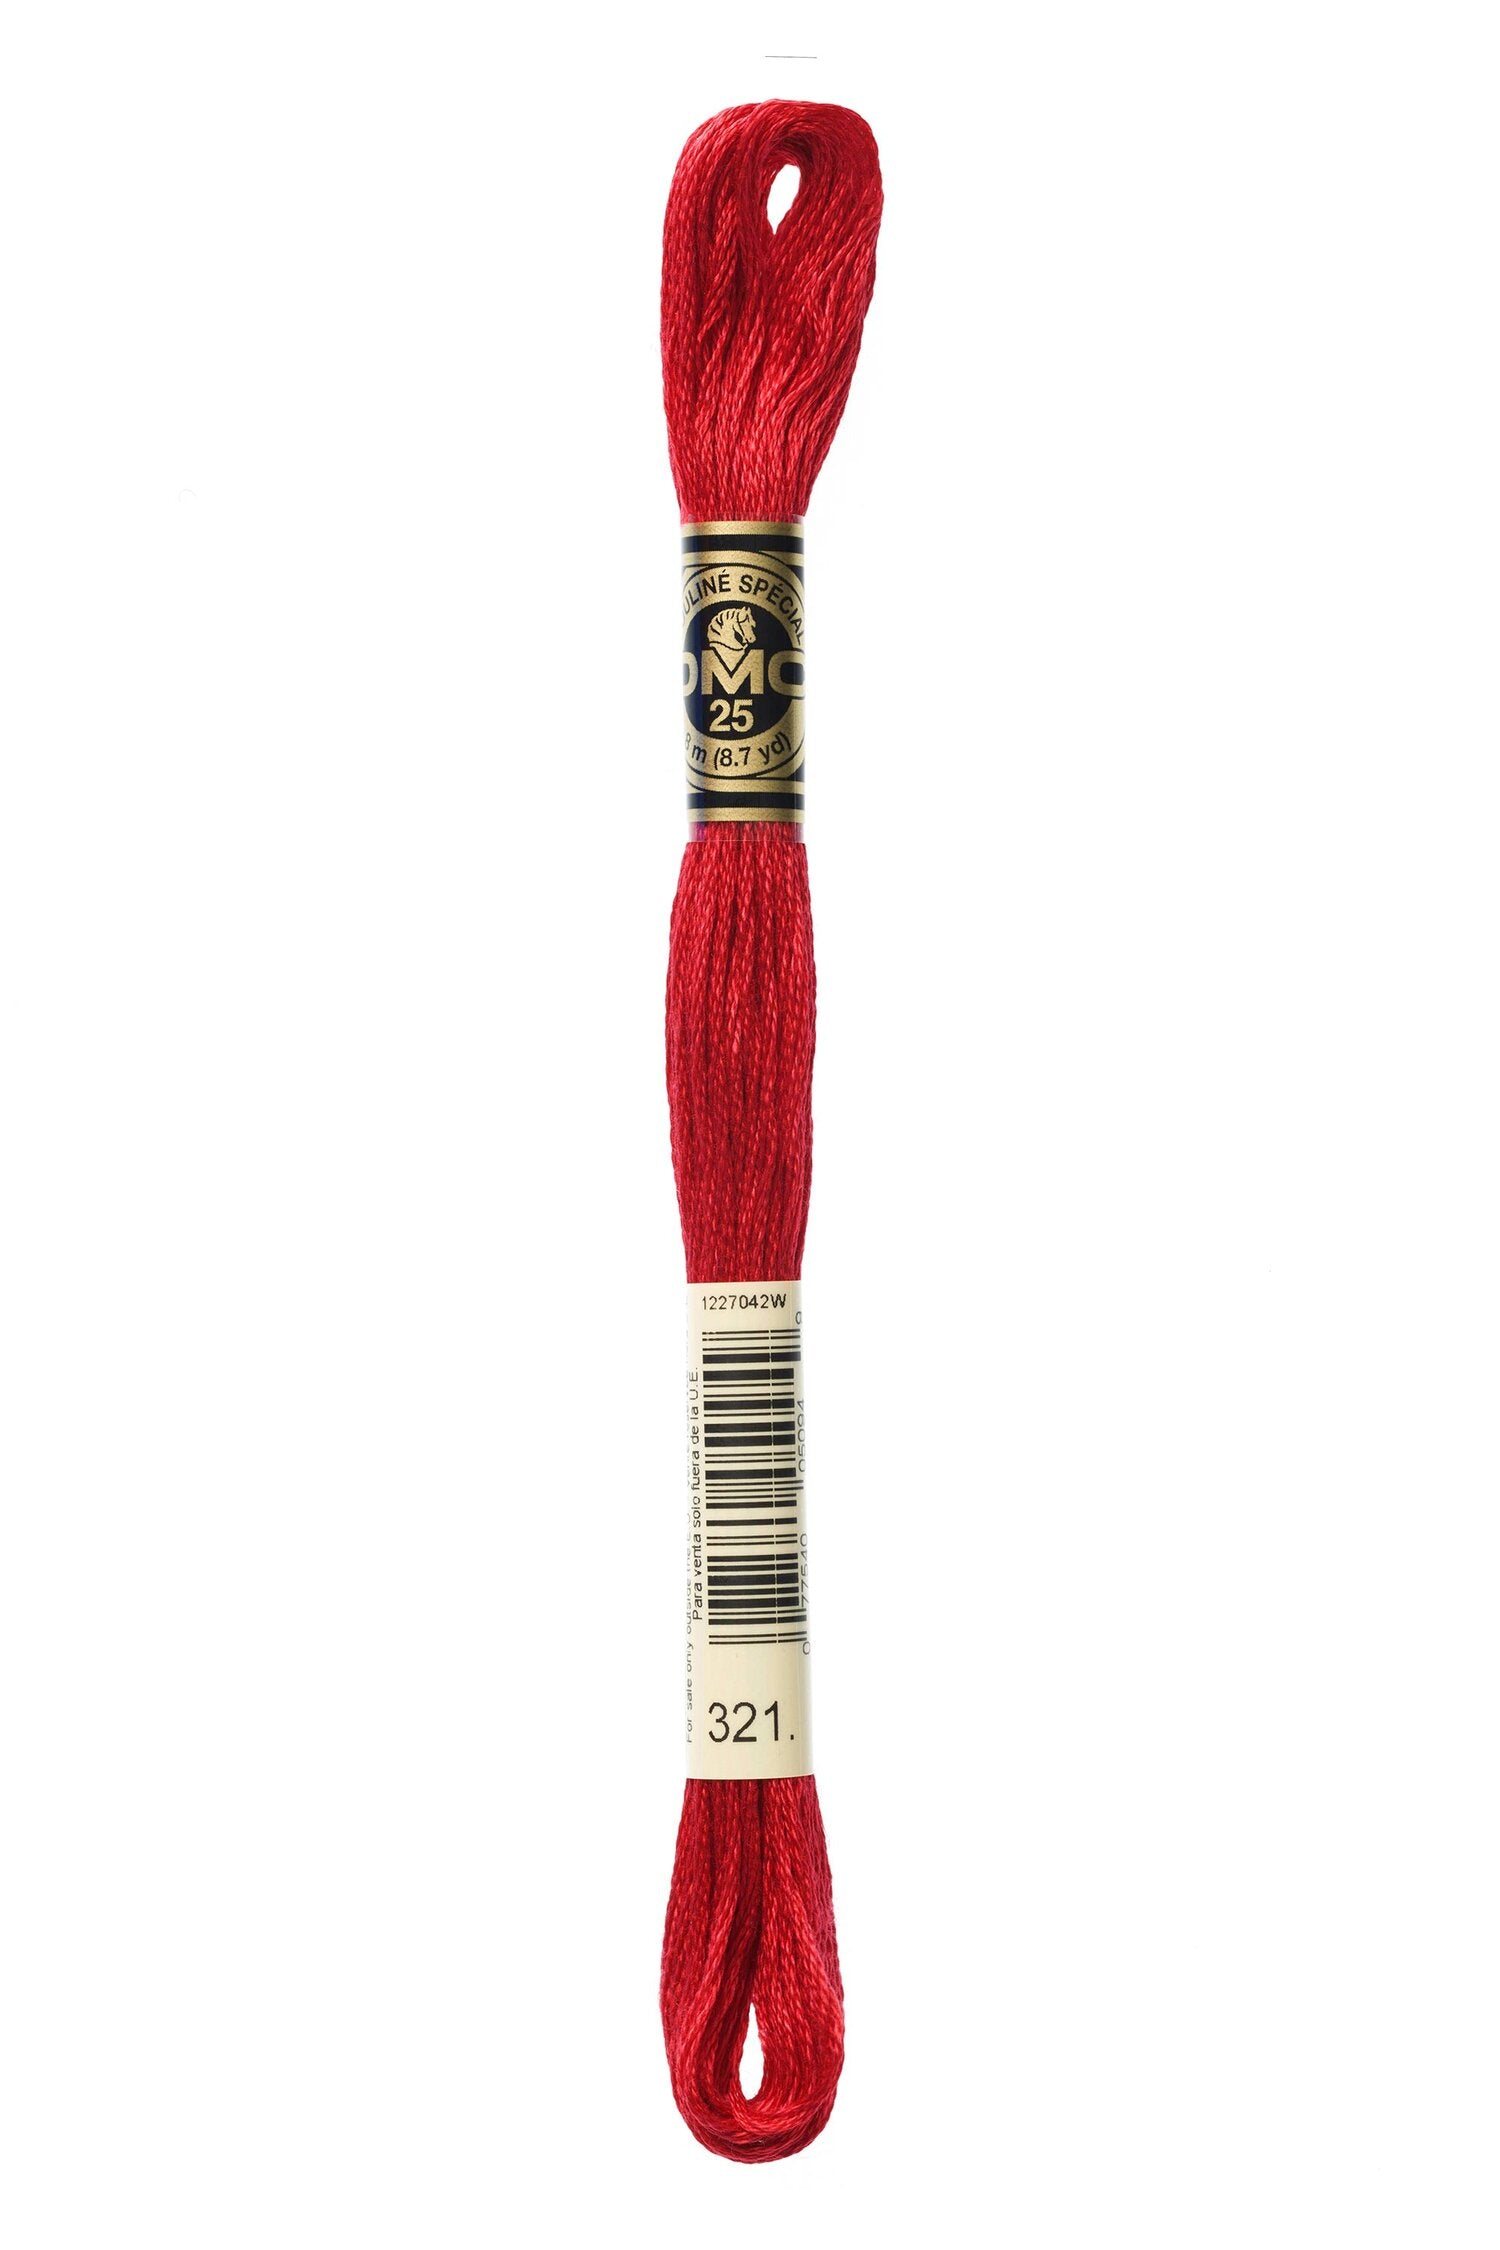 DMC 321 - Red - DMC 6 Strand Embroidery Thread, Thread & Floss, Thread & Floss, The Crafty Grimalkin - A Cross Stitch Store